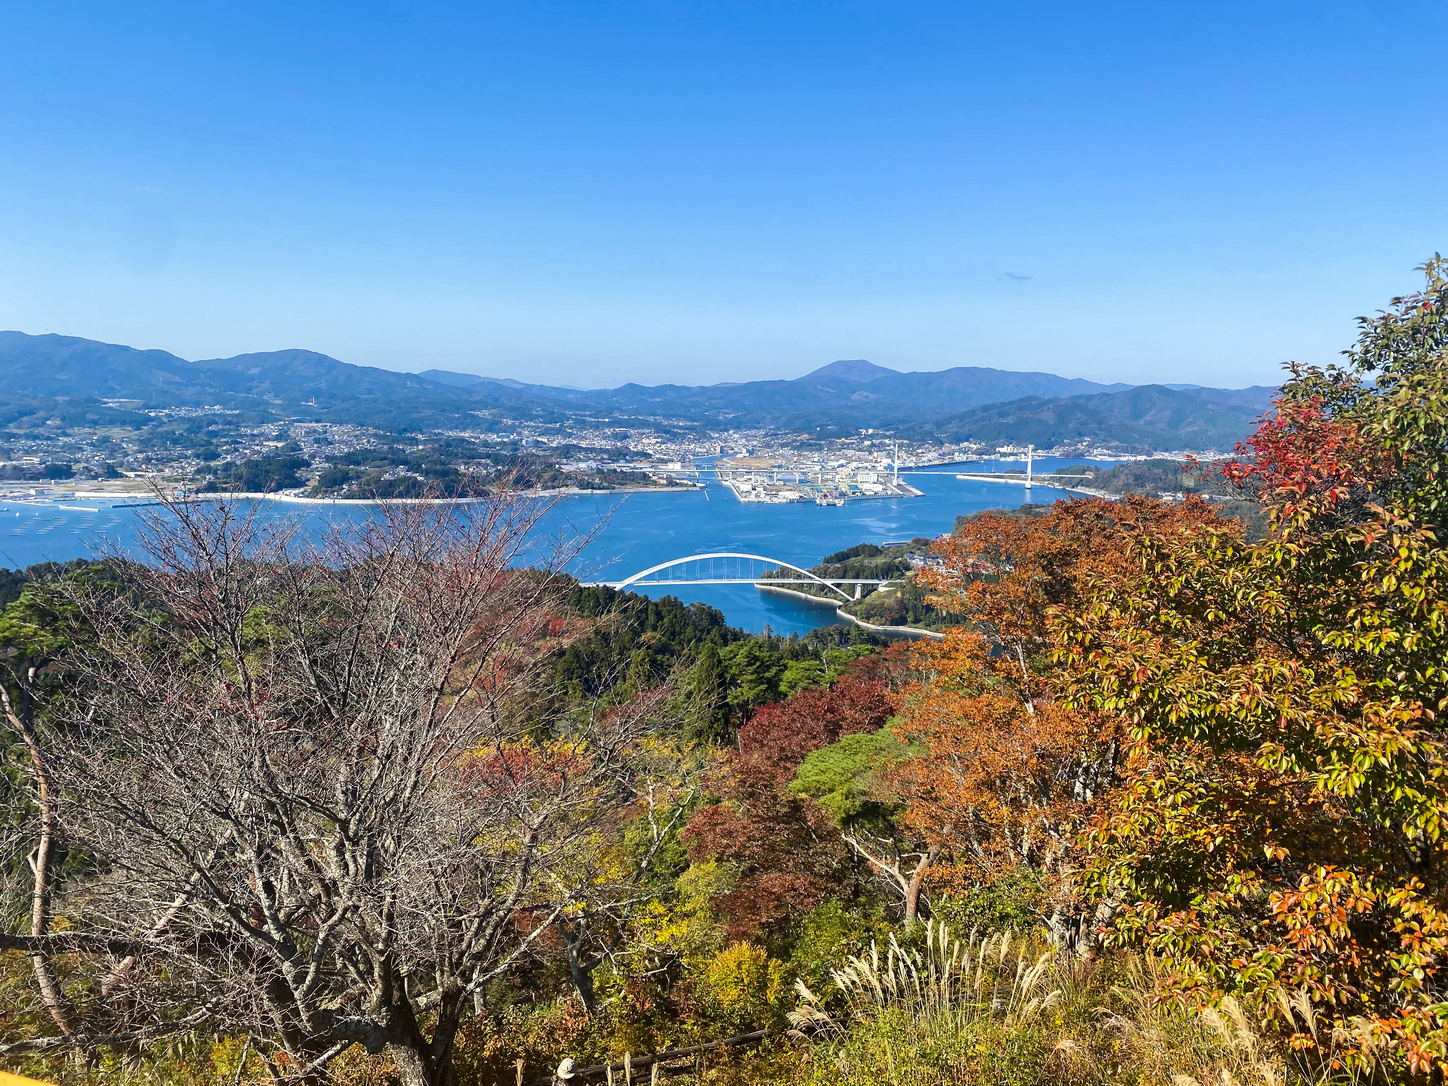 Tohoku Daytrip: Explore Kesennuma’s Oshima Island by Bicycle